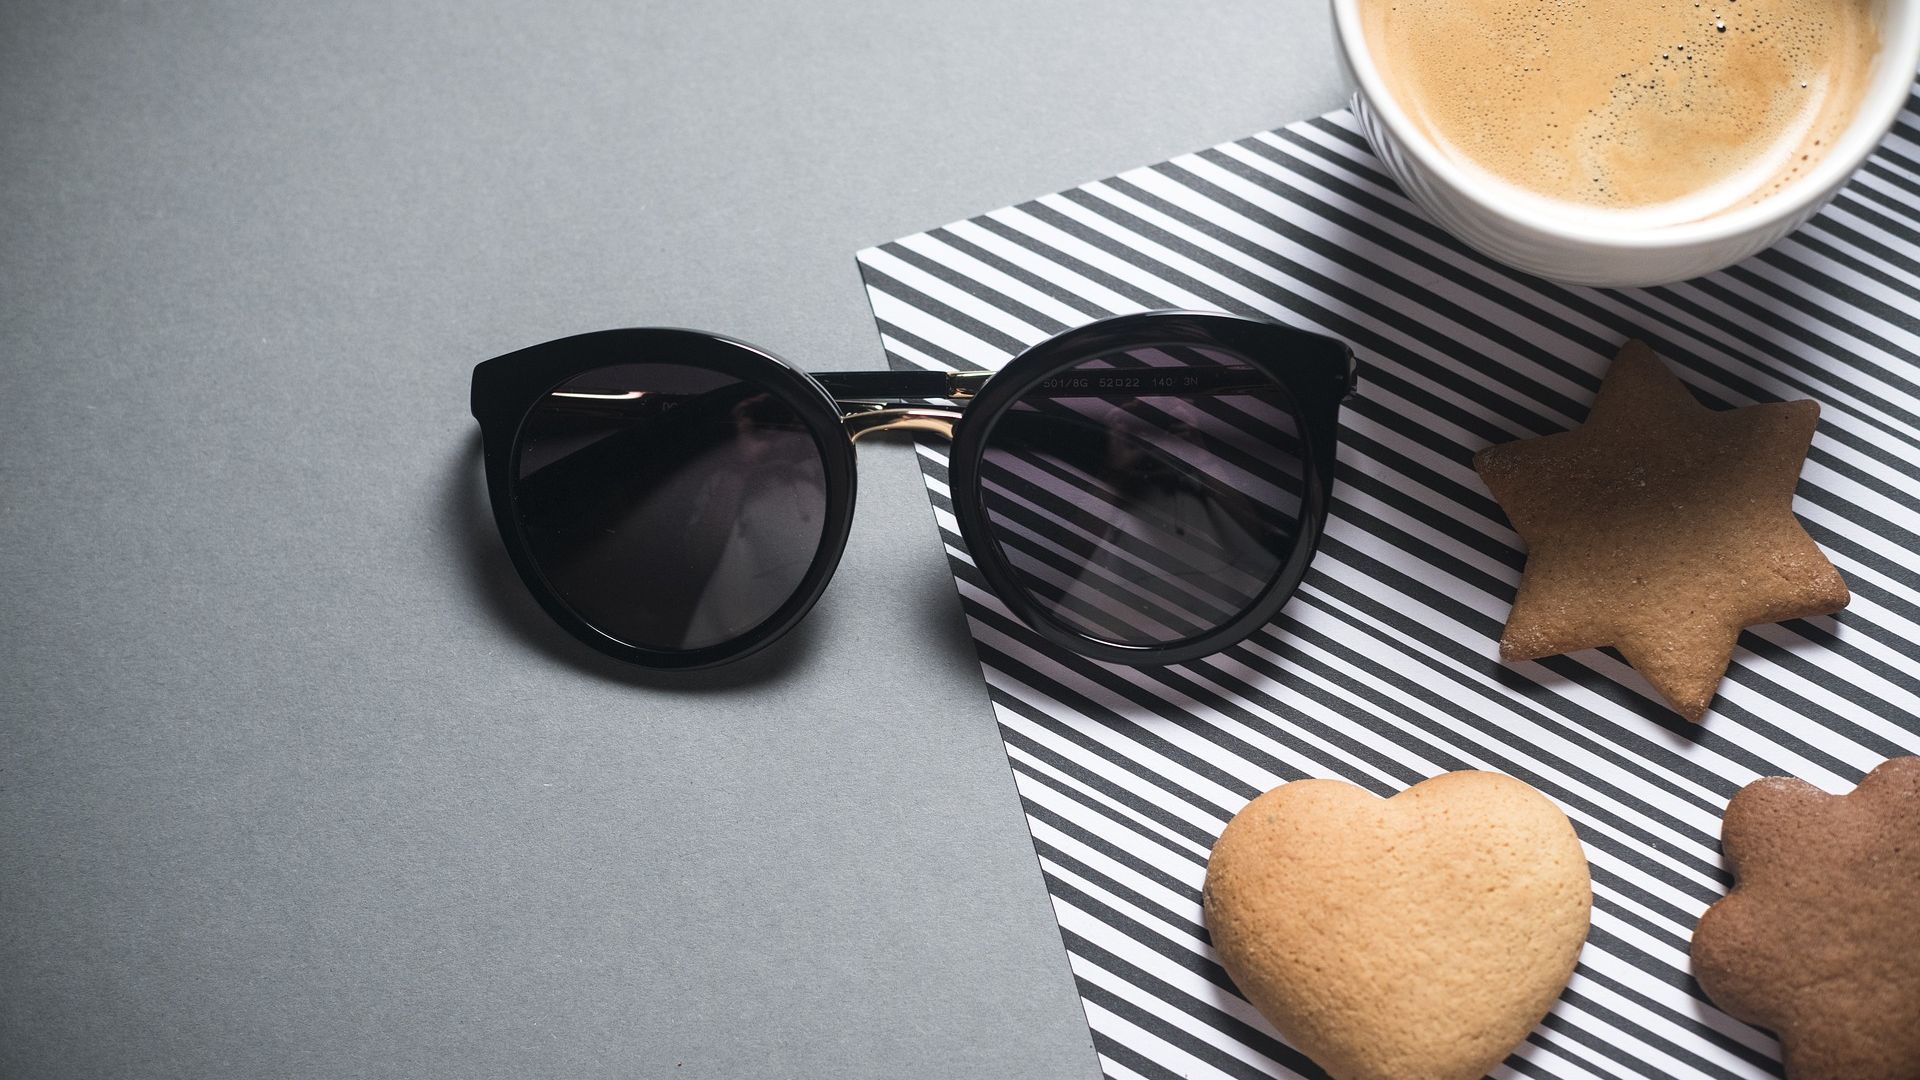 Wallpaper Sunglasses, cookies, coffee cup